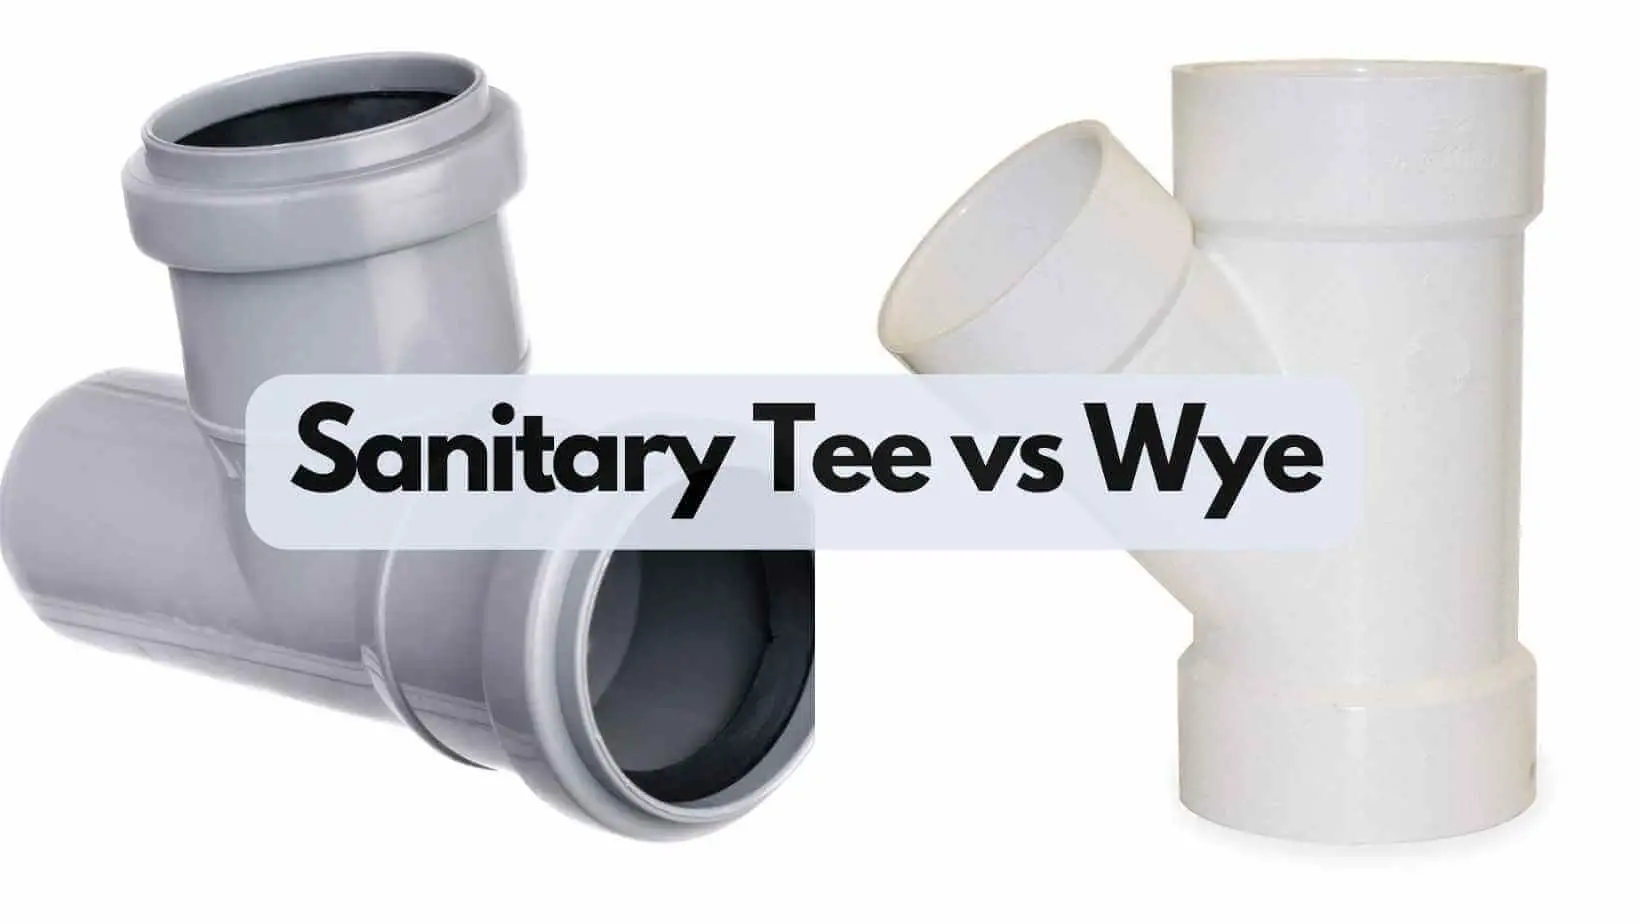 Sanitary Tee vs Wye